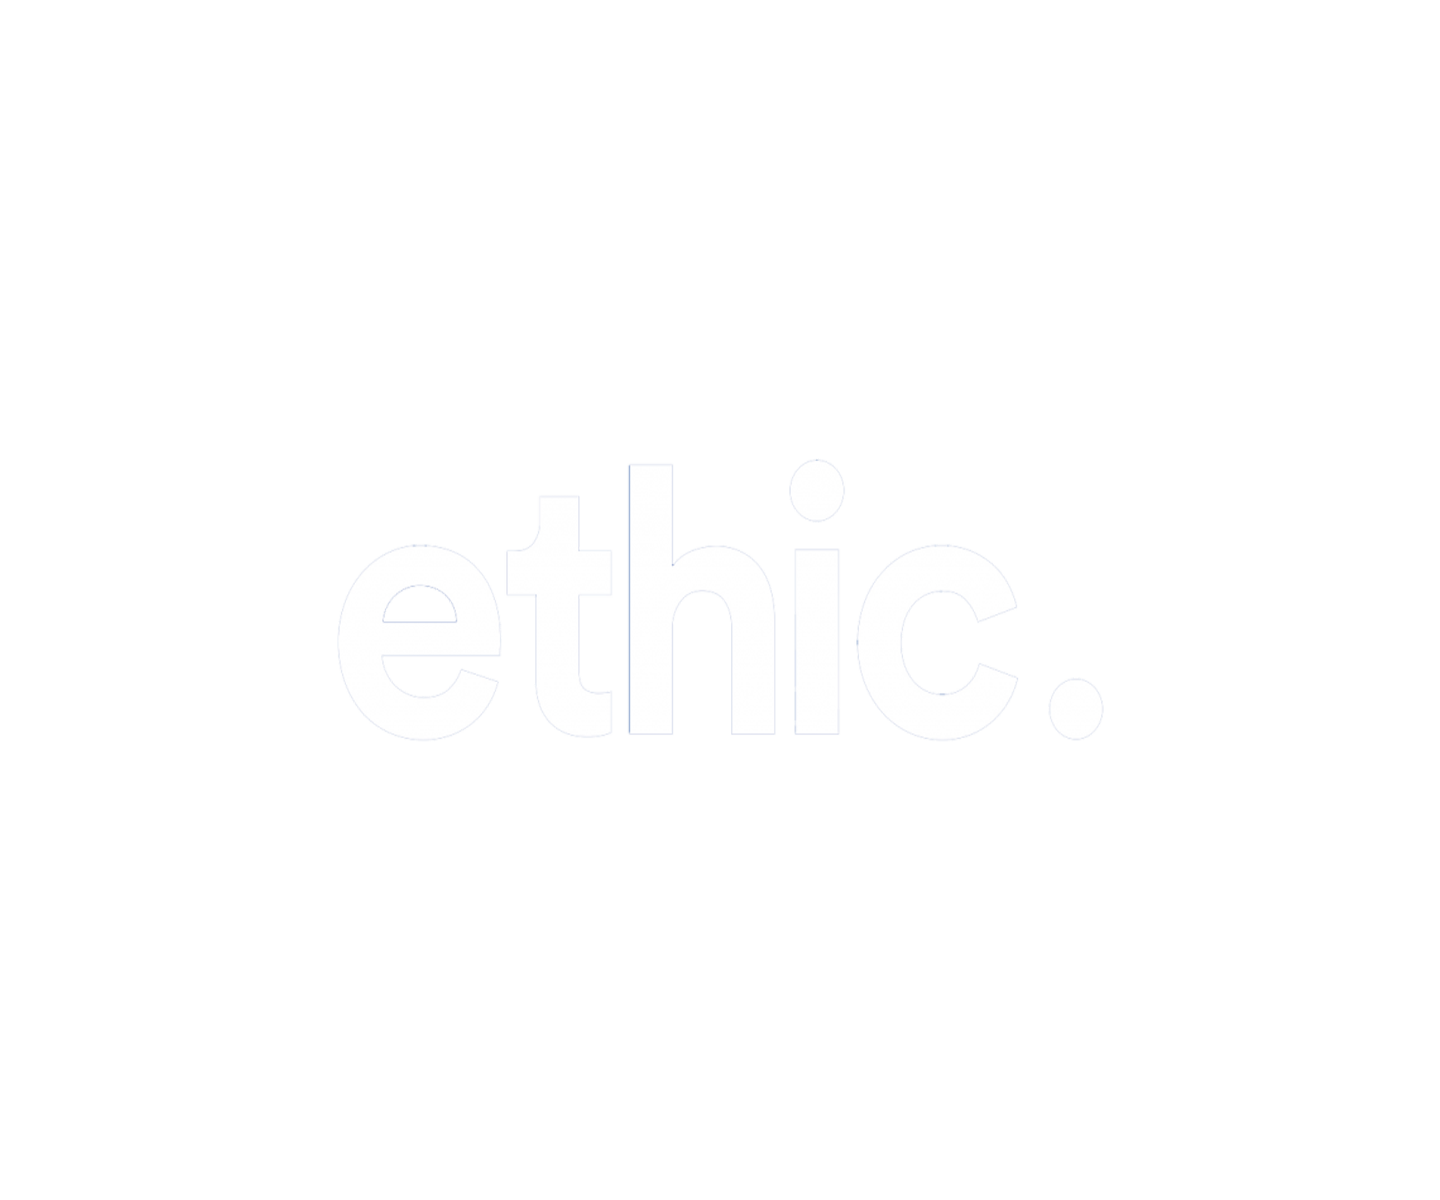 ethic